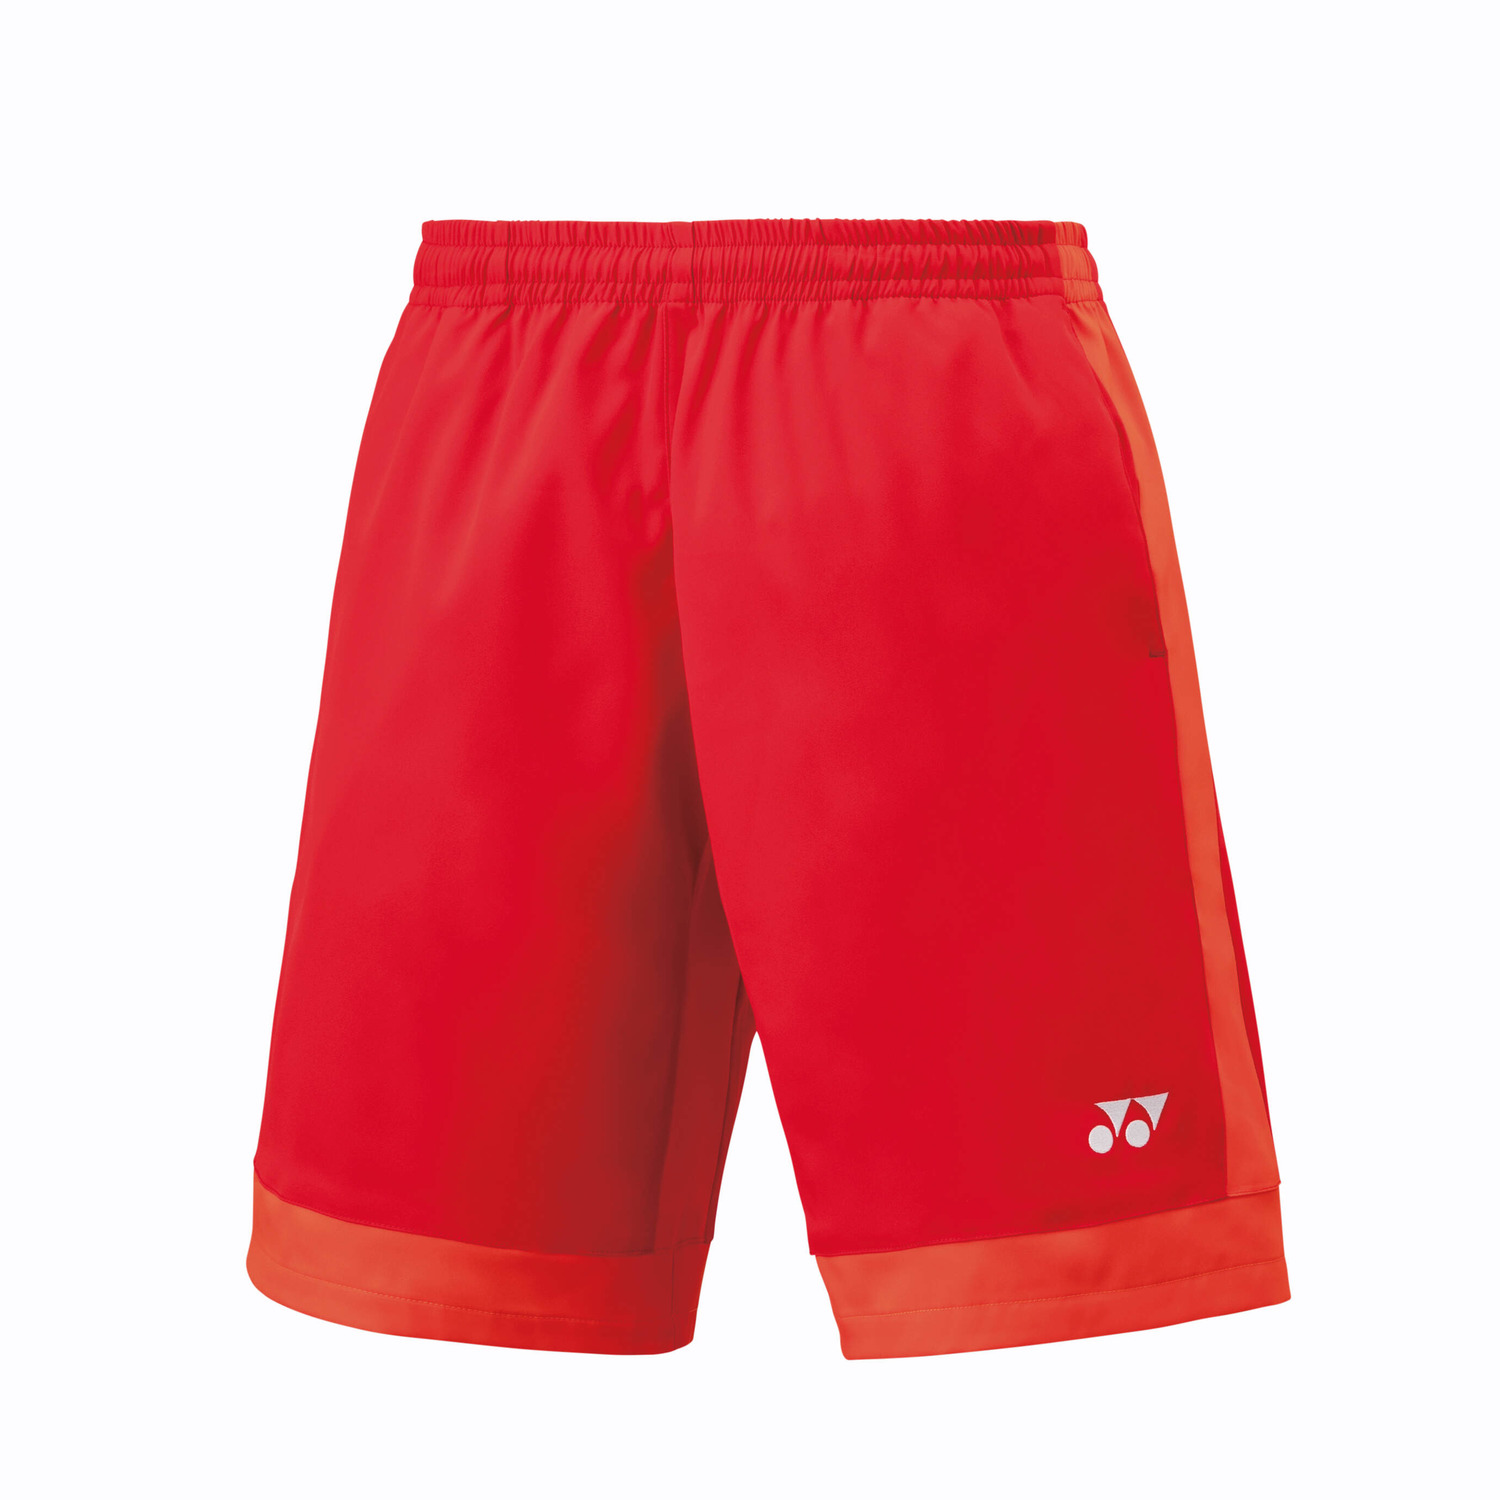 Yonex Badminton/ Sports Shorts 15144 Sunset Red (Made in Japan) MEN'S